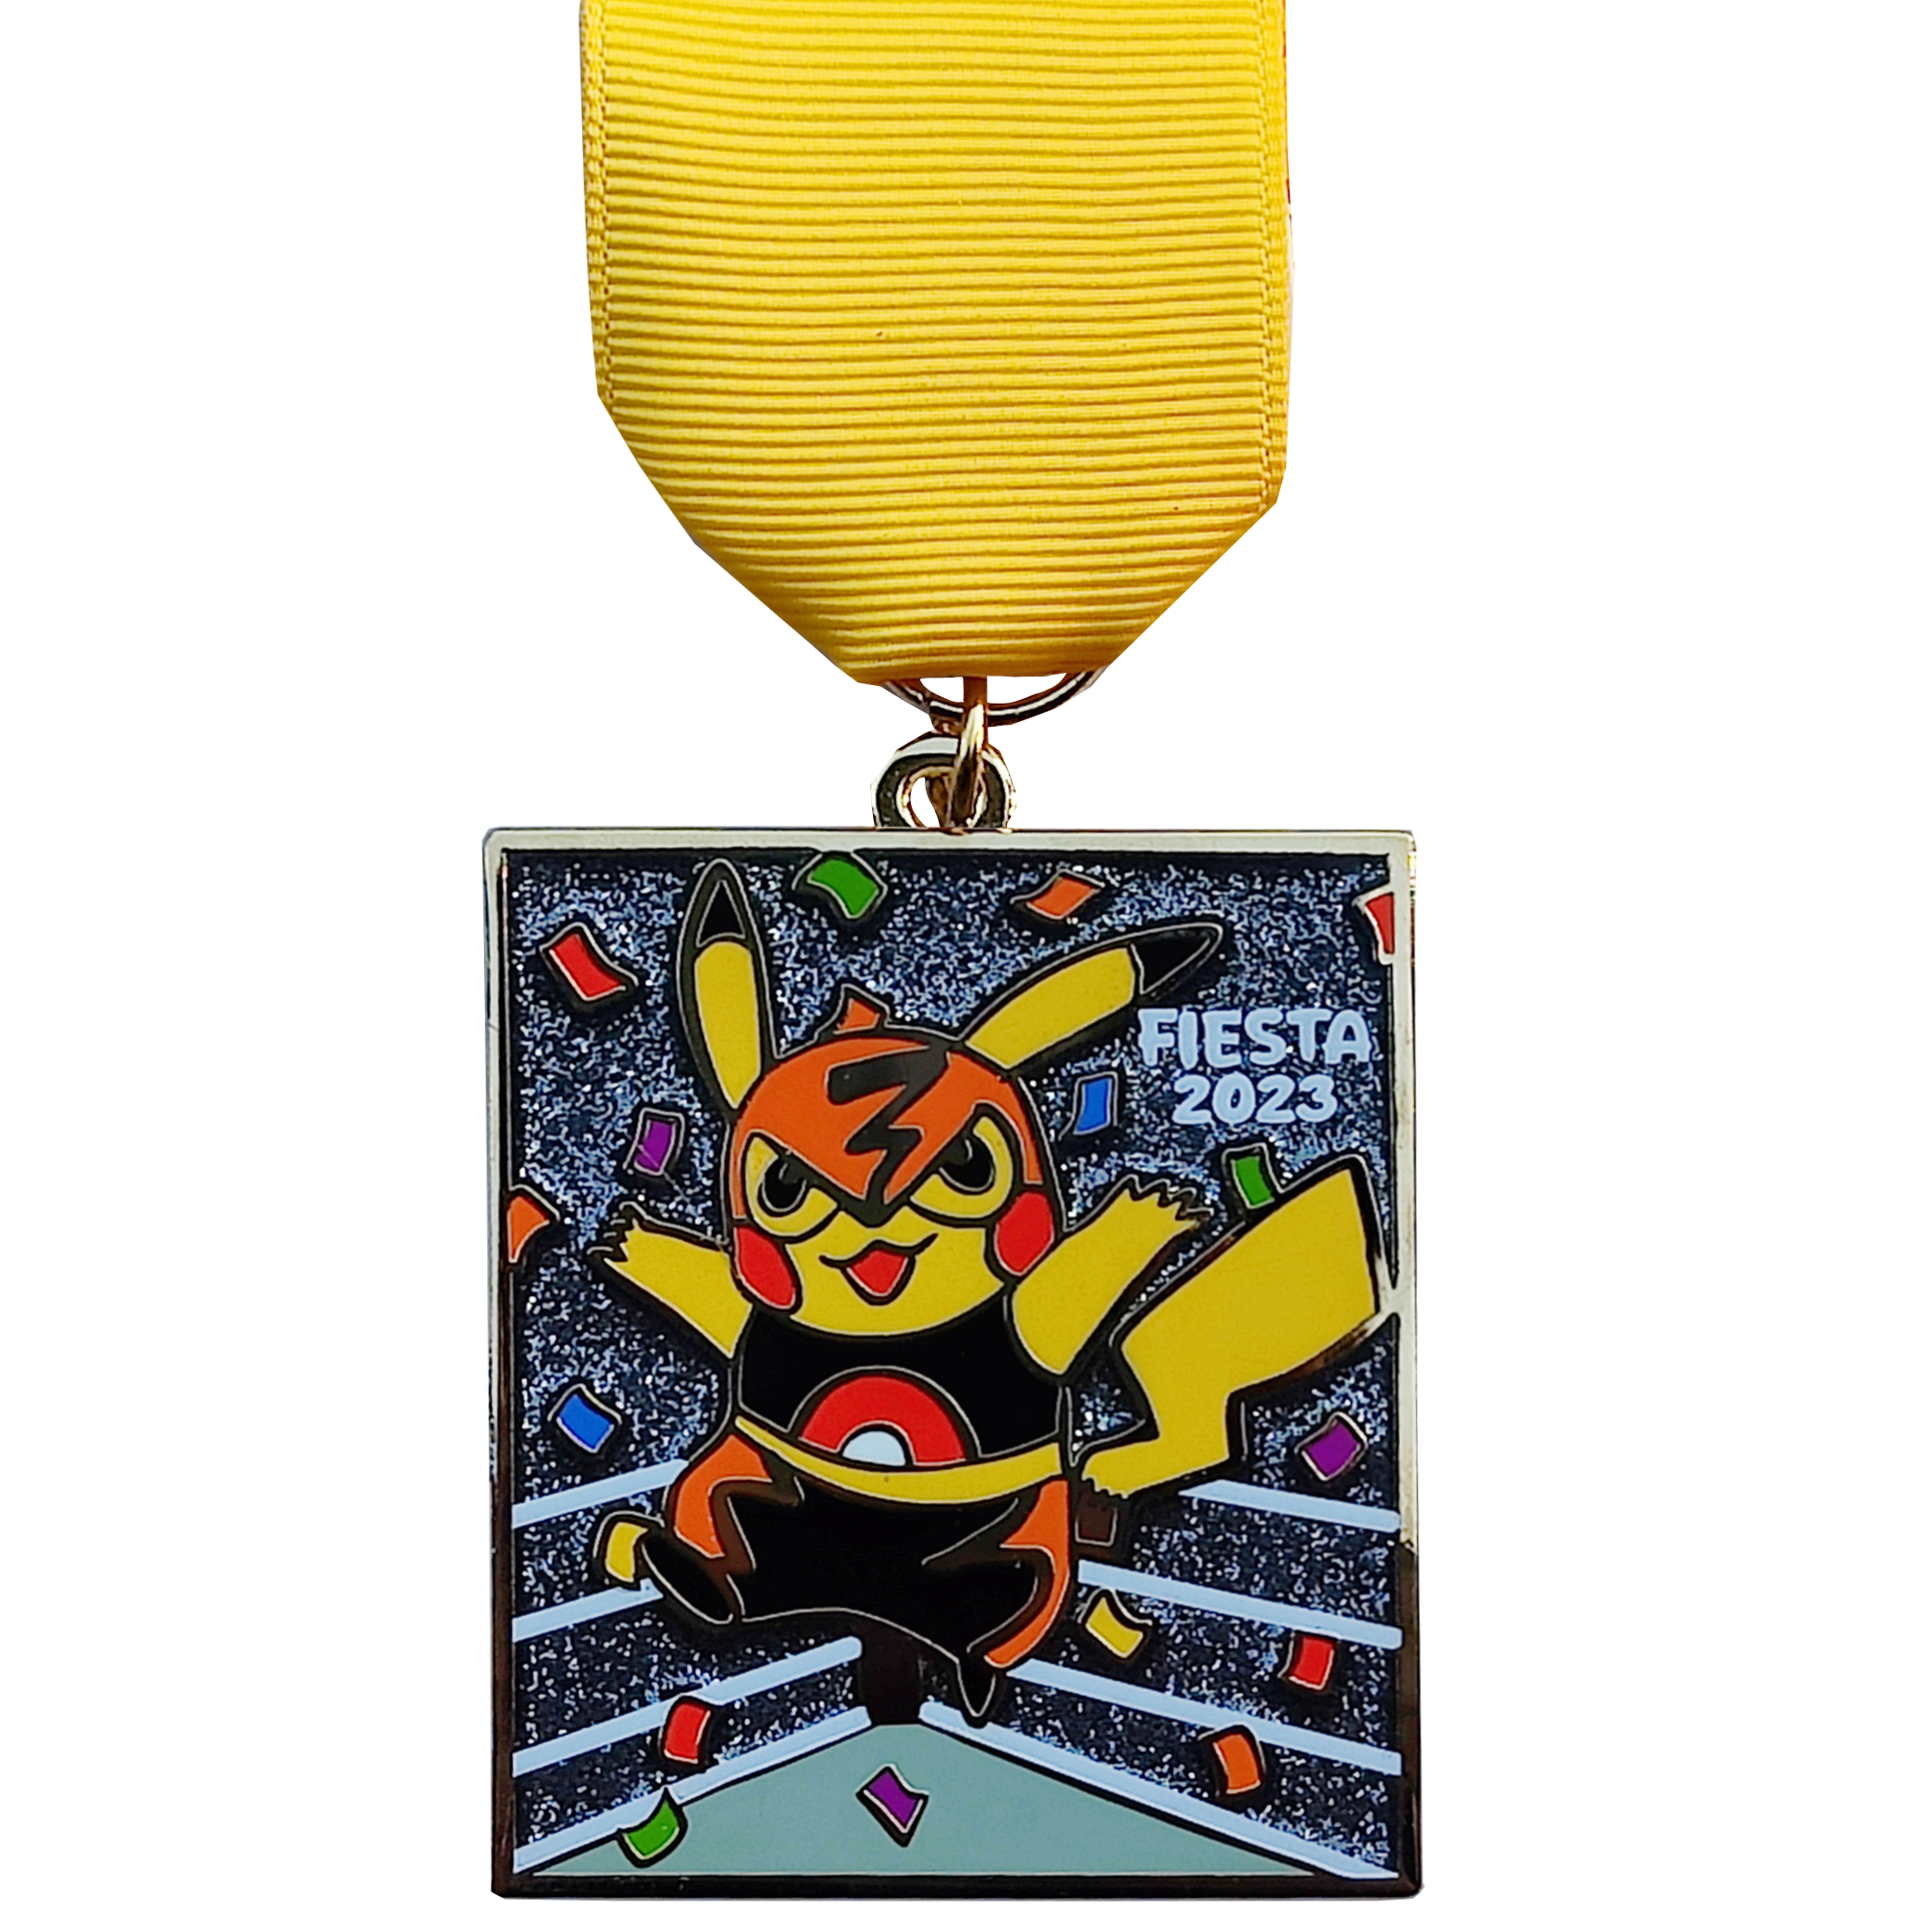 pikachu fiesta medal san antonio 2023